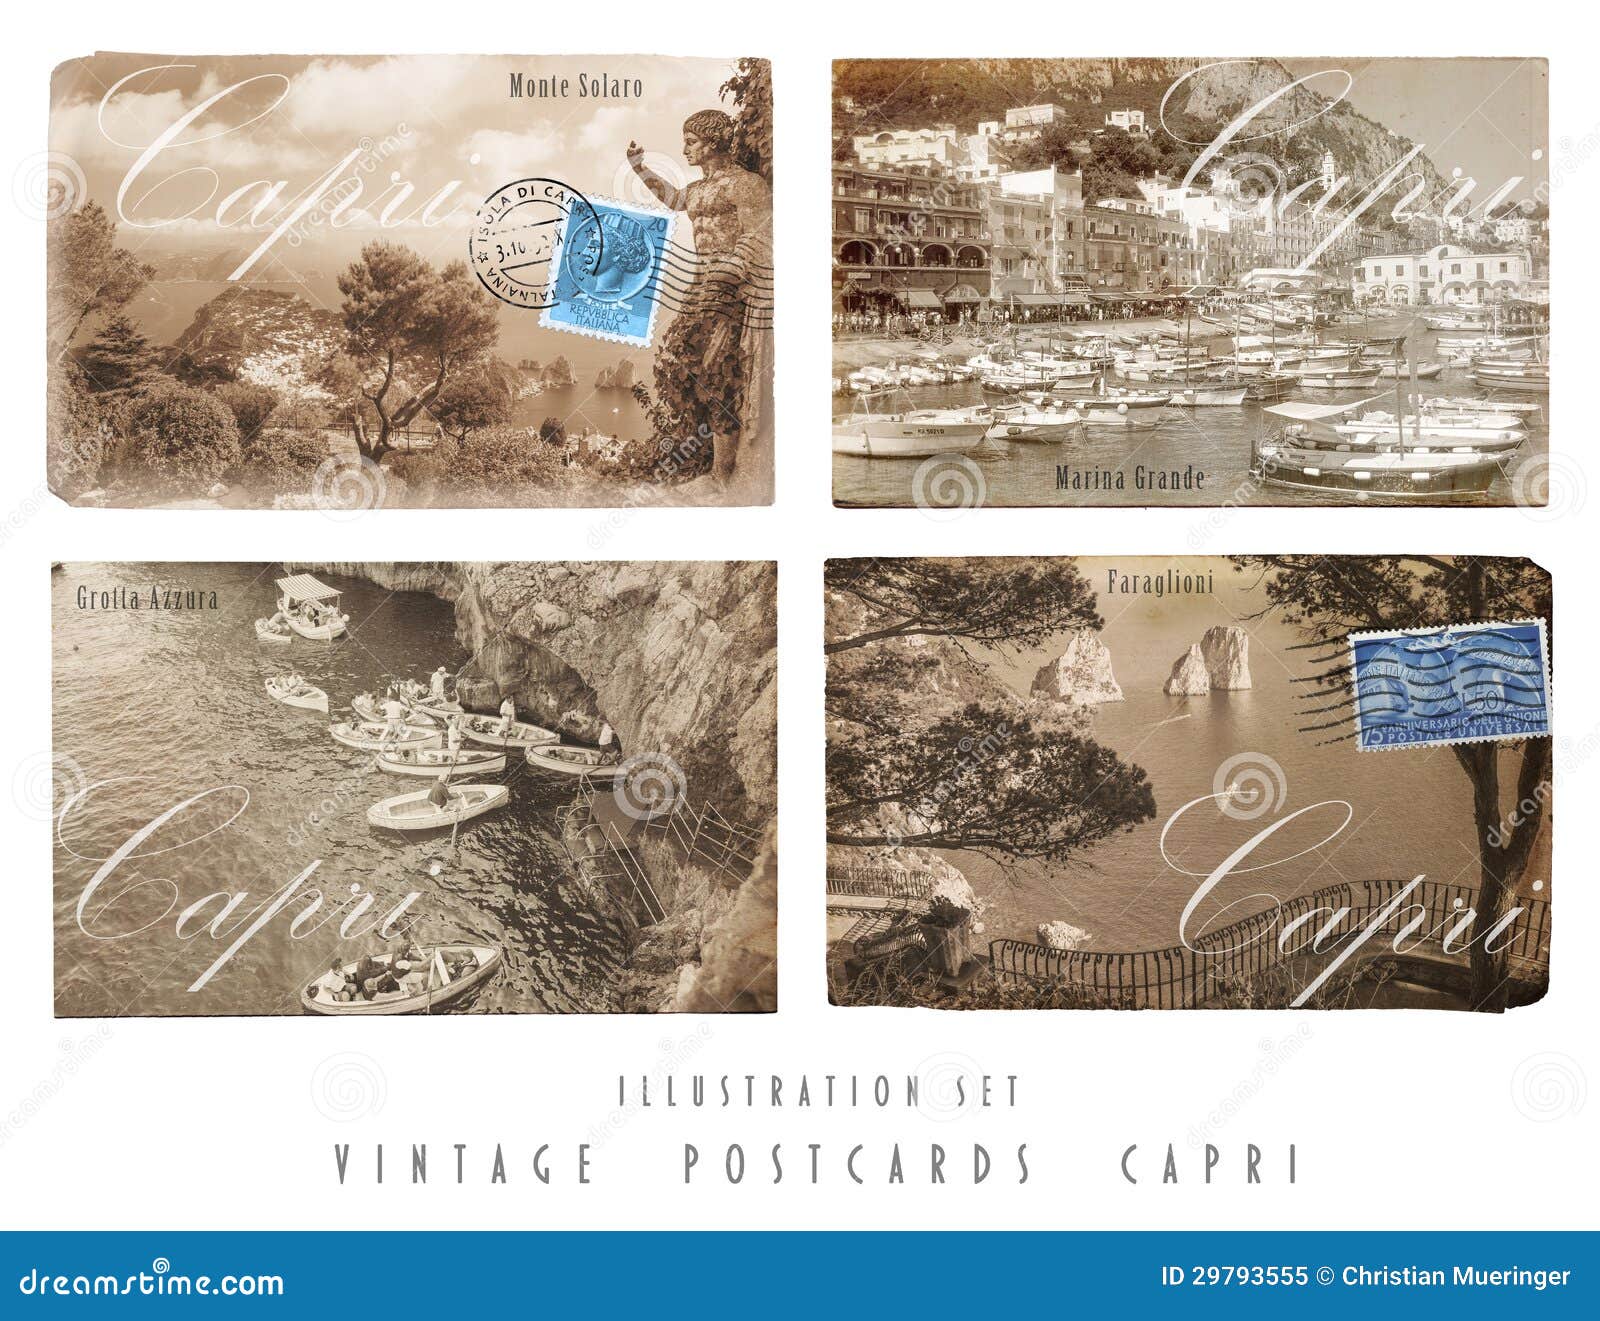 vintage postcards set capri